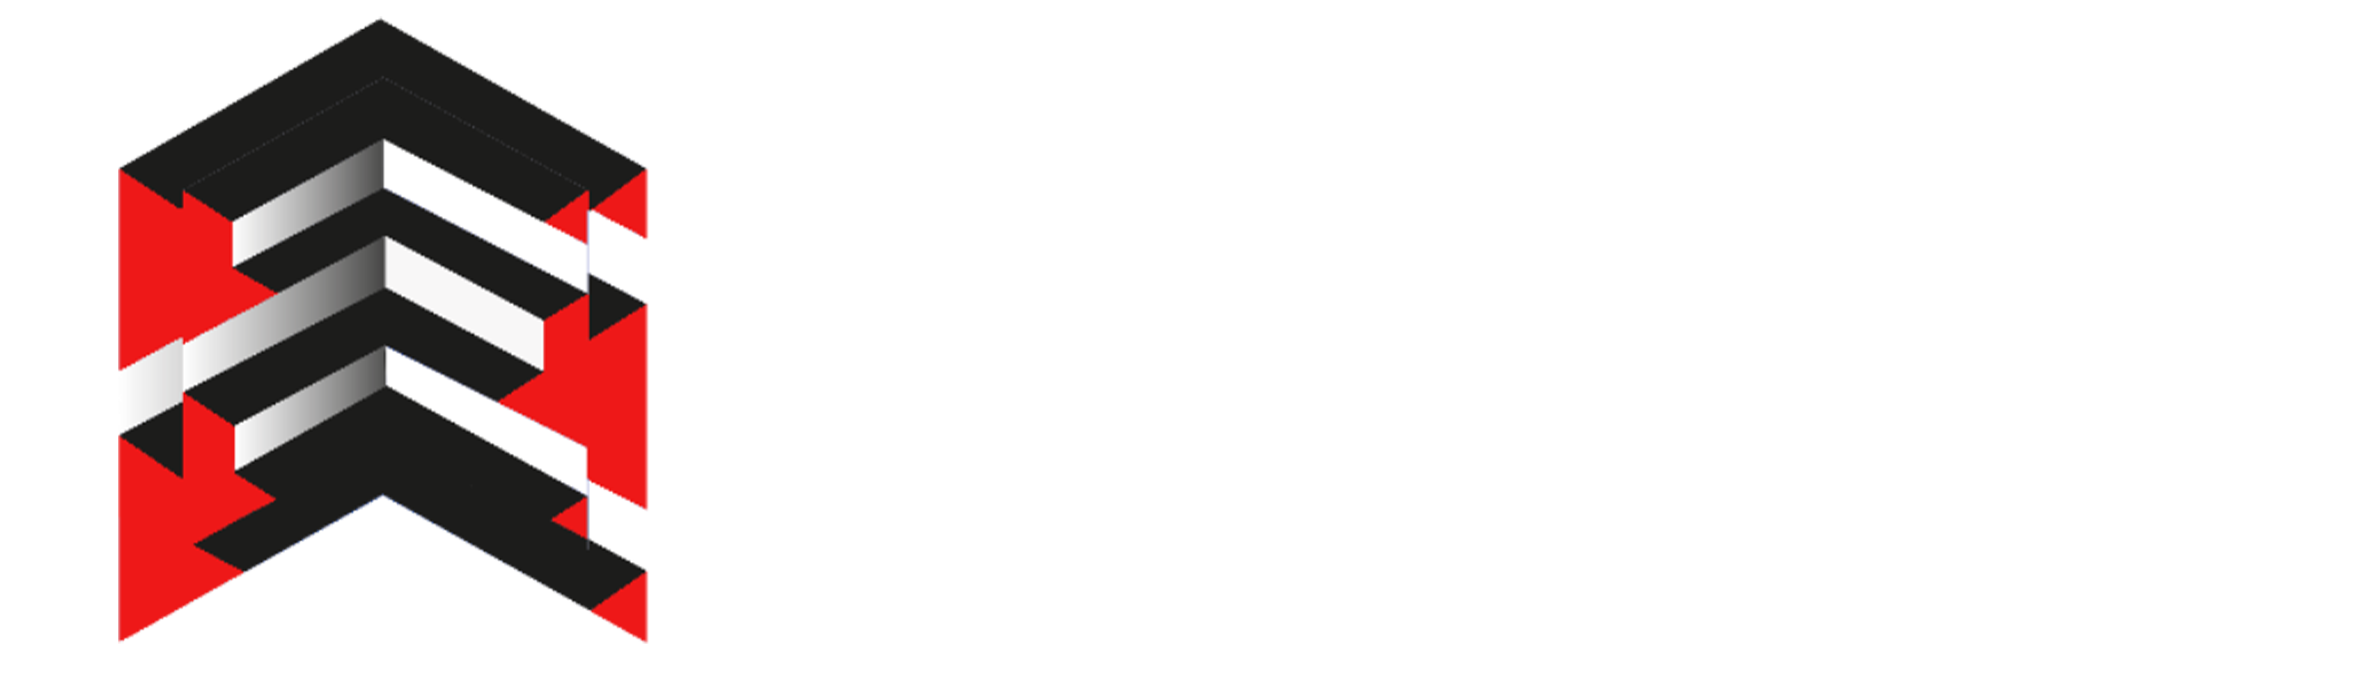 ITS Seguridad logo